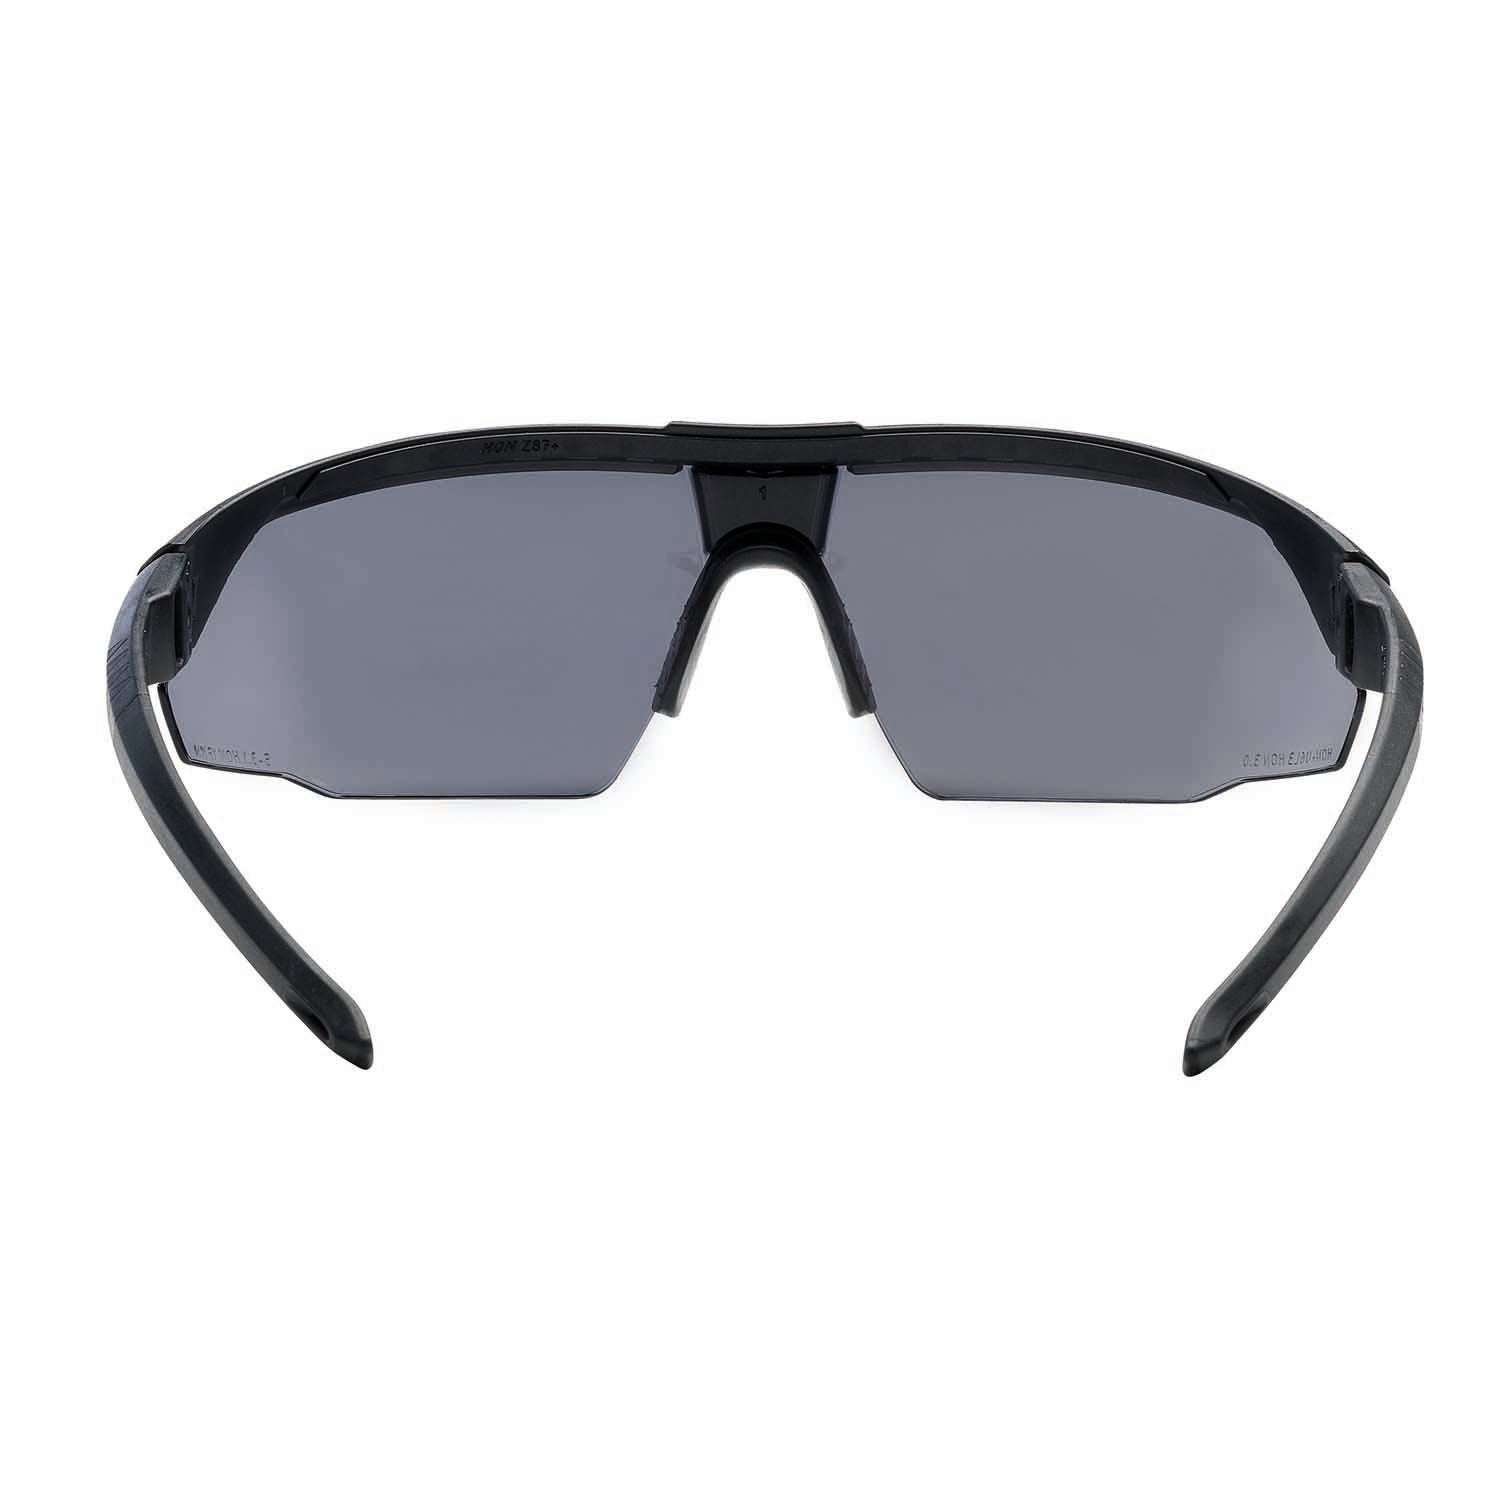 Safety spectacles honeywell avatar black frame grey lens